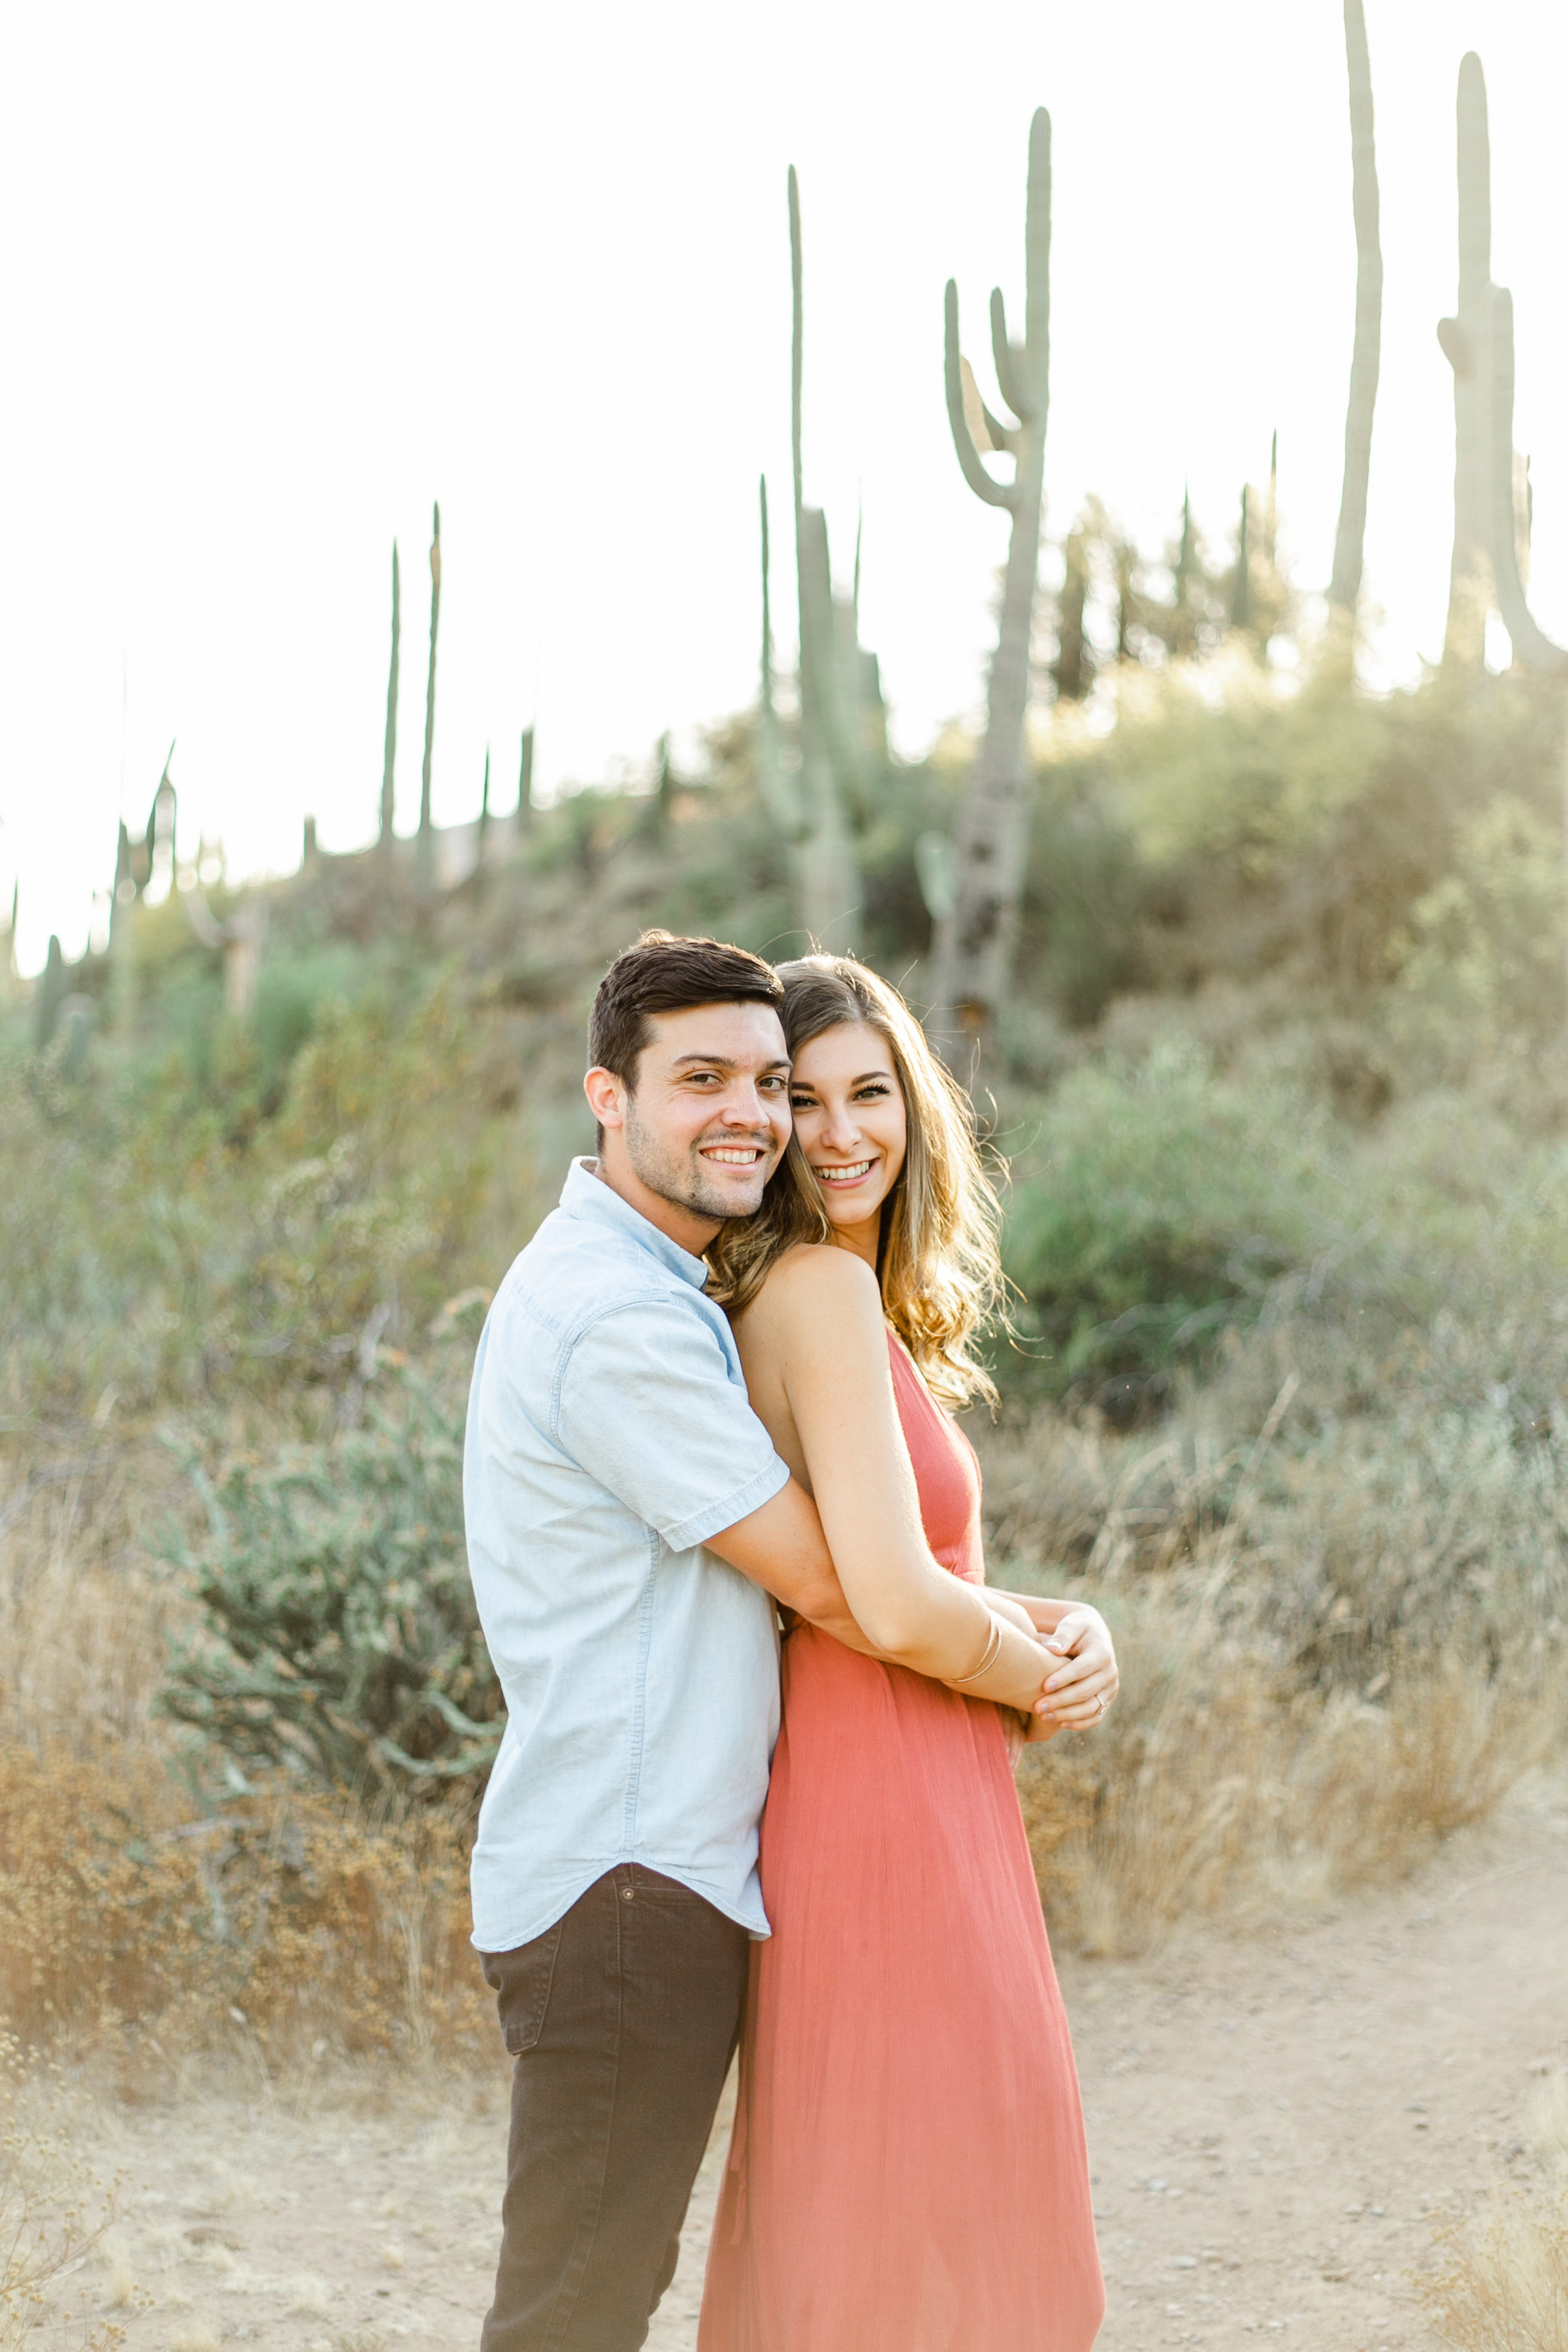 Karlie Colleen Photography - Arizona Desert Engagement - Brynne & Josh -100